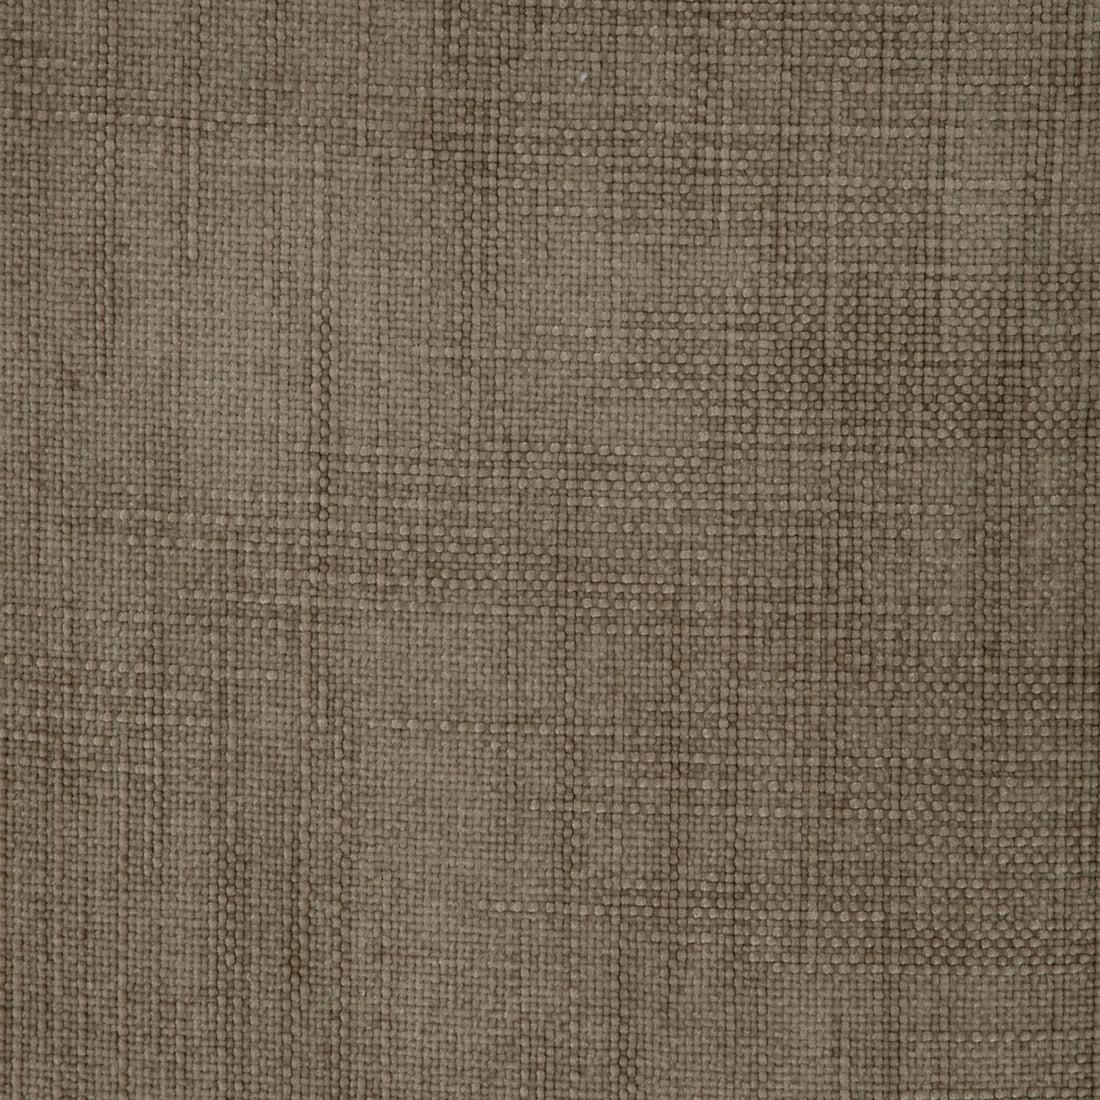 Kravet Smart fabric in 36991-606 color - pattern 36991.606.0 - by Kravet Smart in the Performance Kravetarmor collection